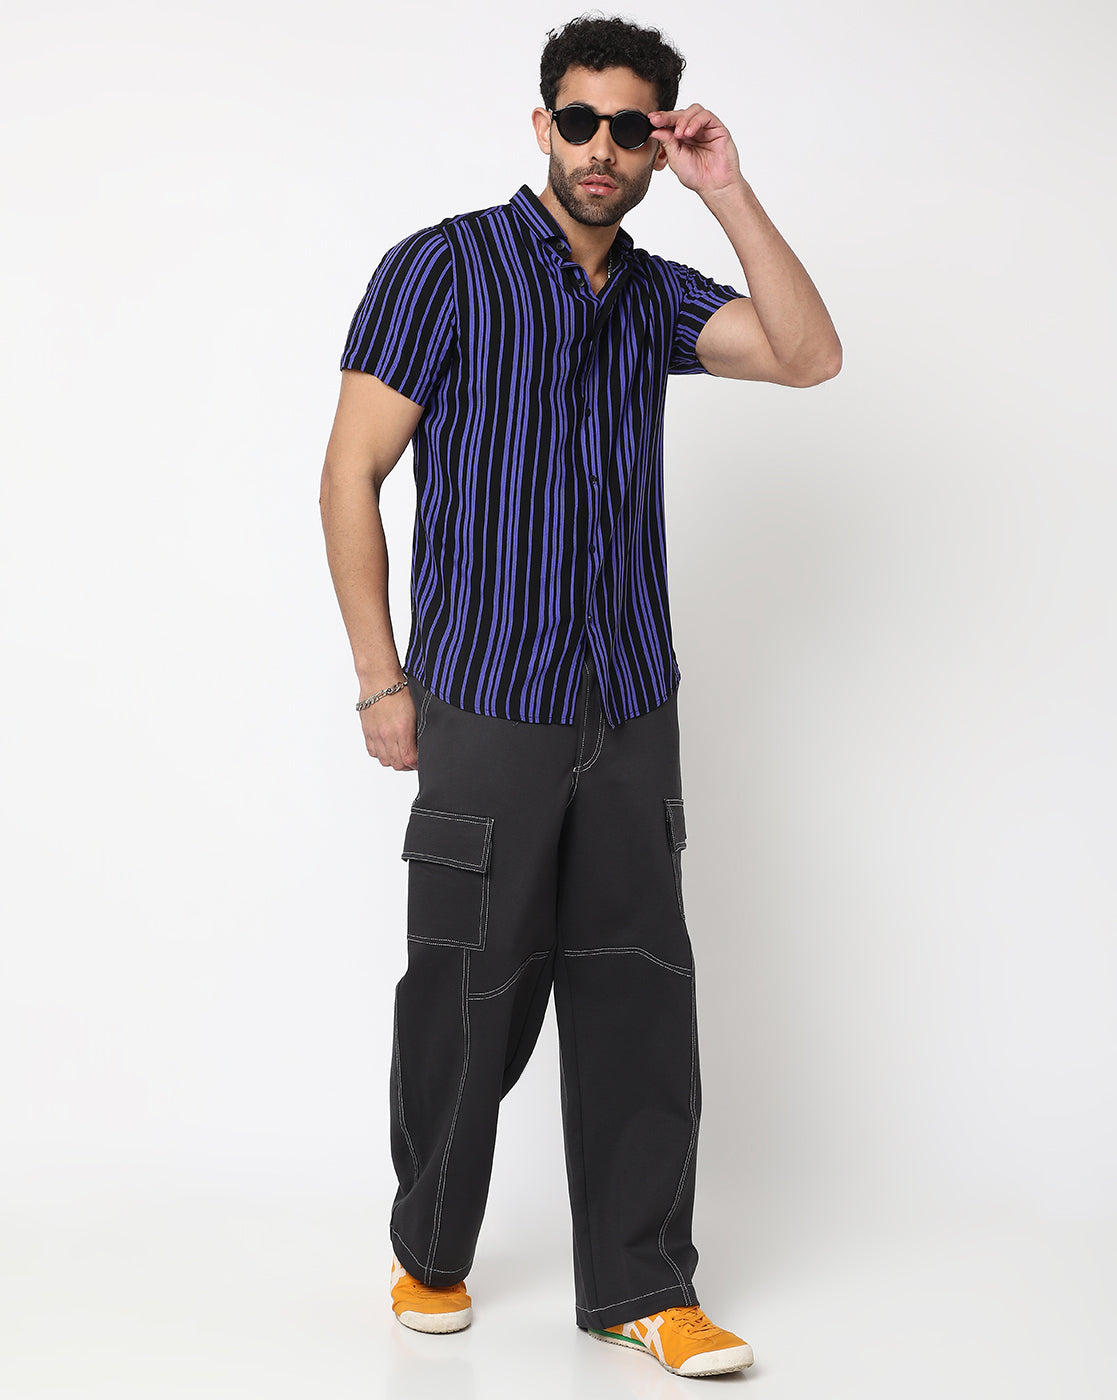 Voilet & Black Stripes Rayon Printed Half Sleeve Shirt